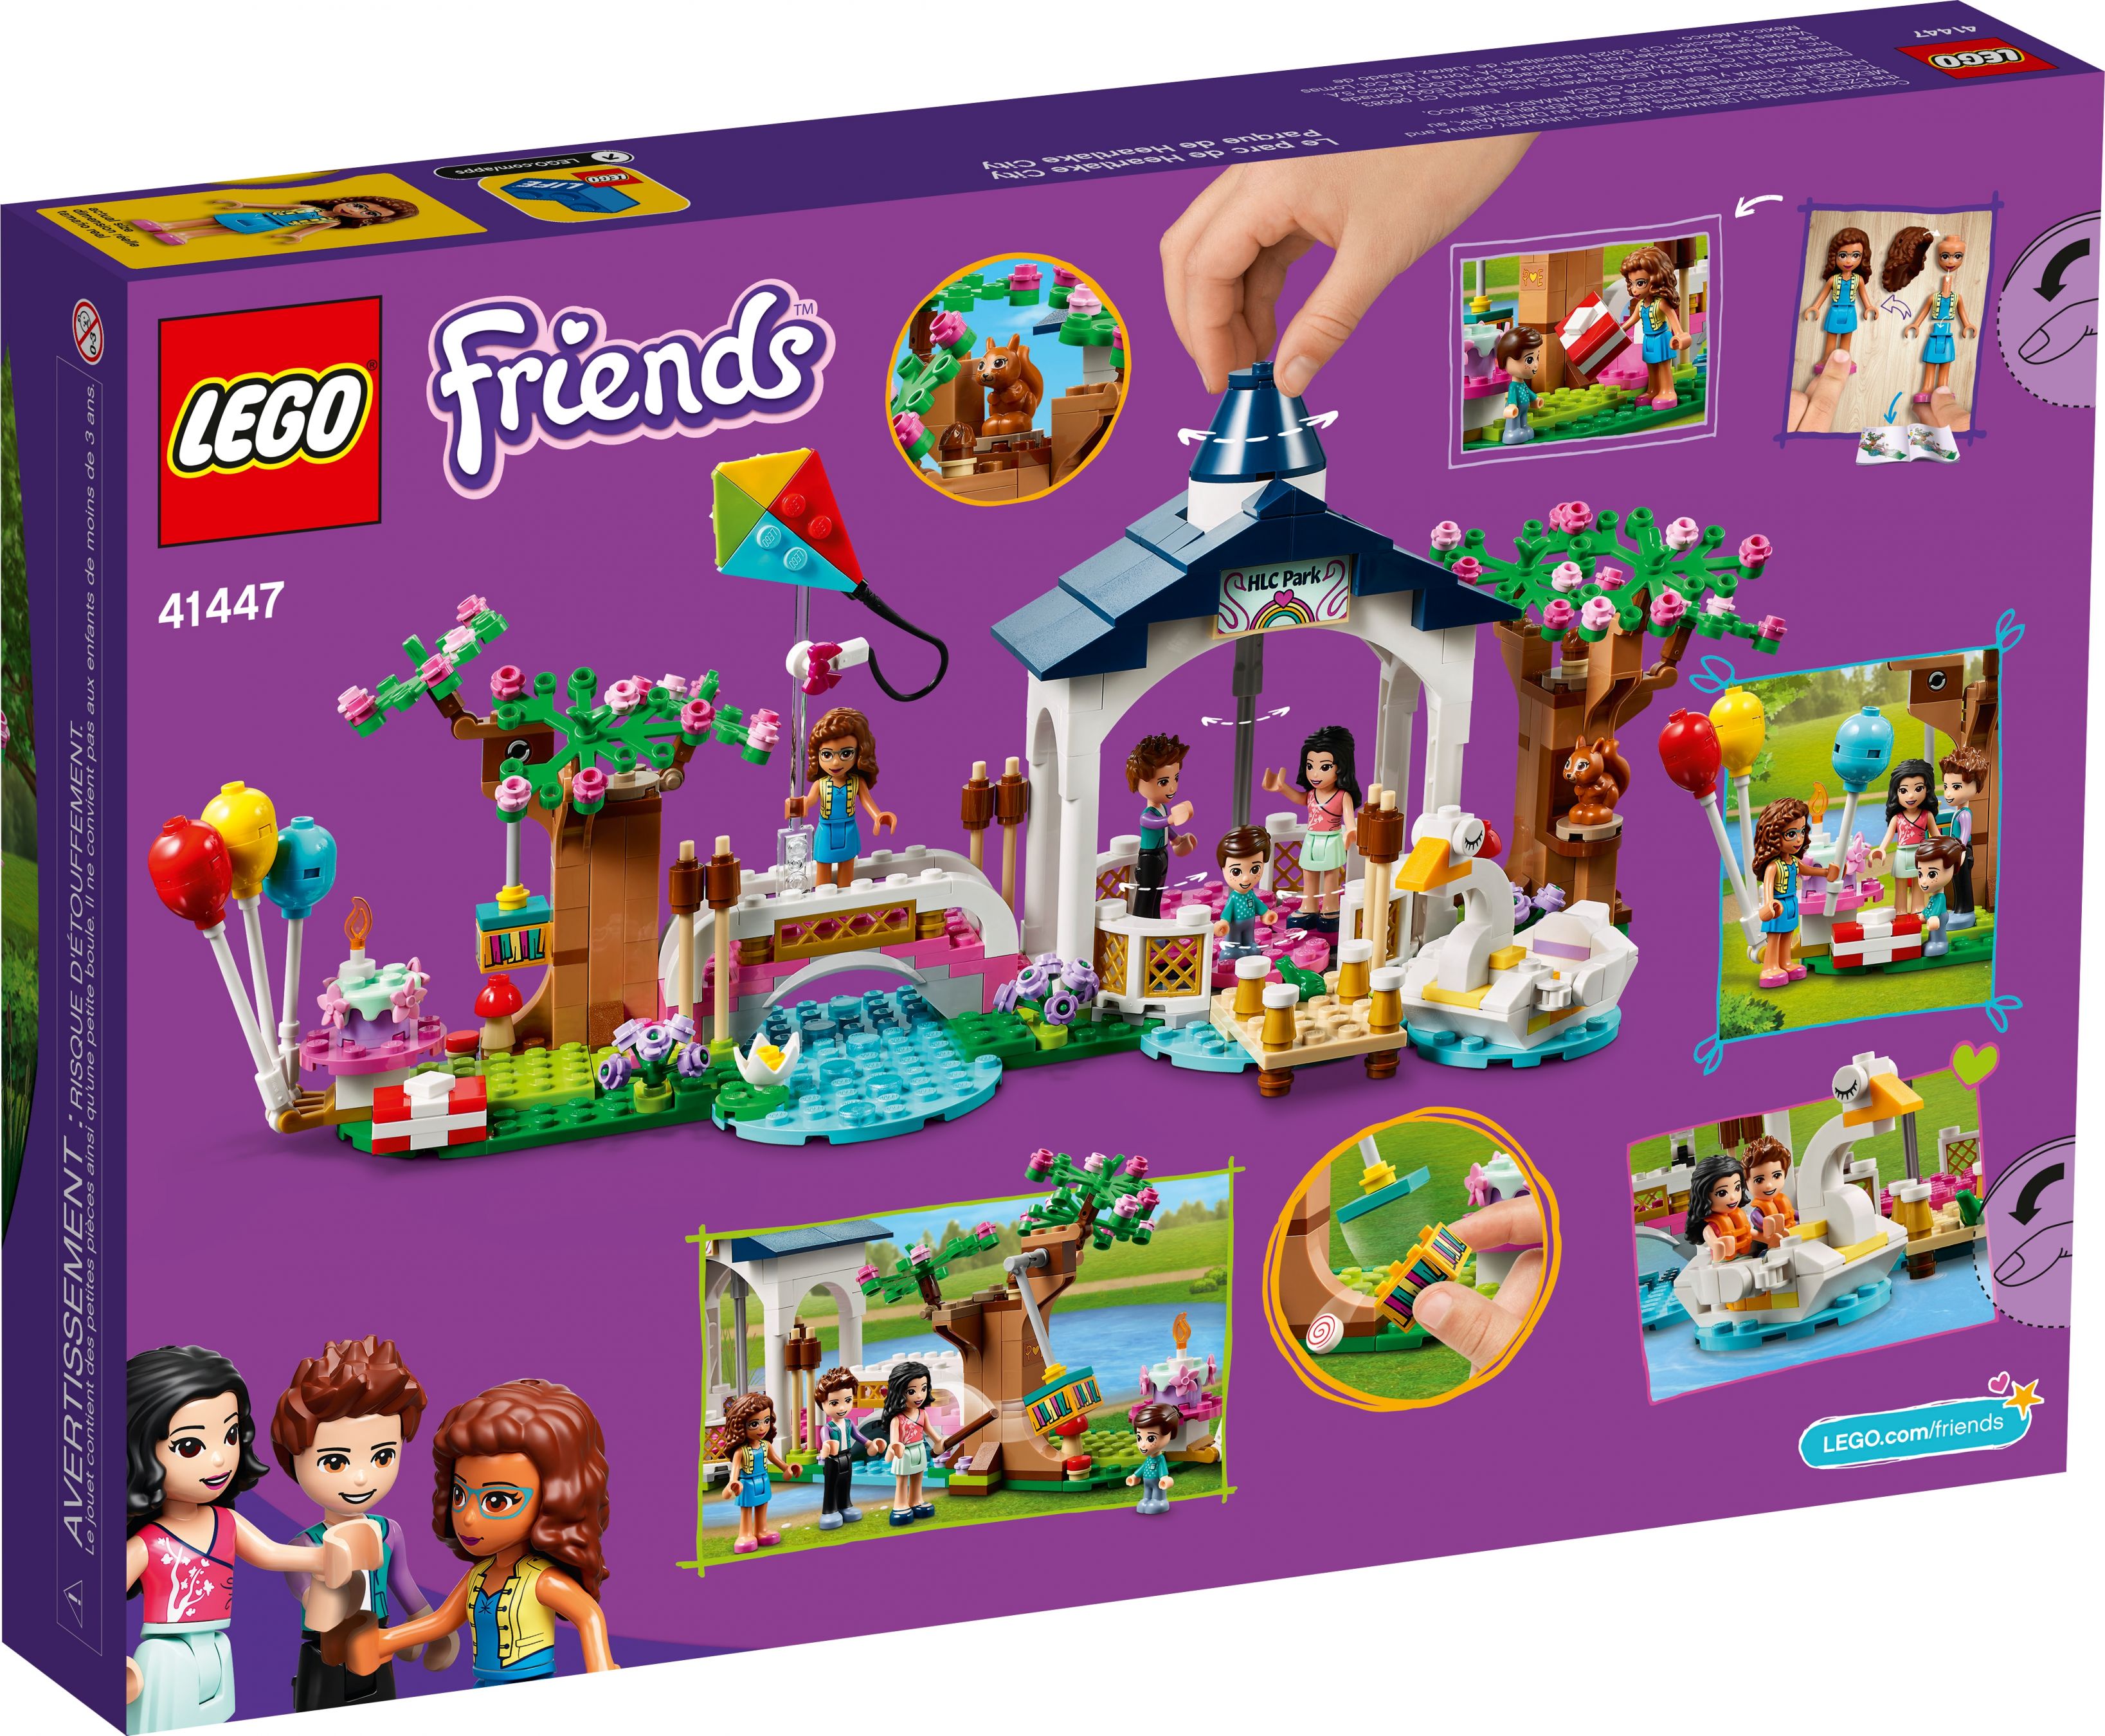 LEGO Friends 41447 Heartlake City Park LEGO_41447_alt8.jpg